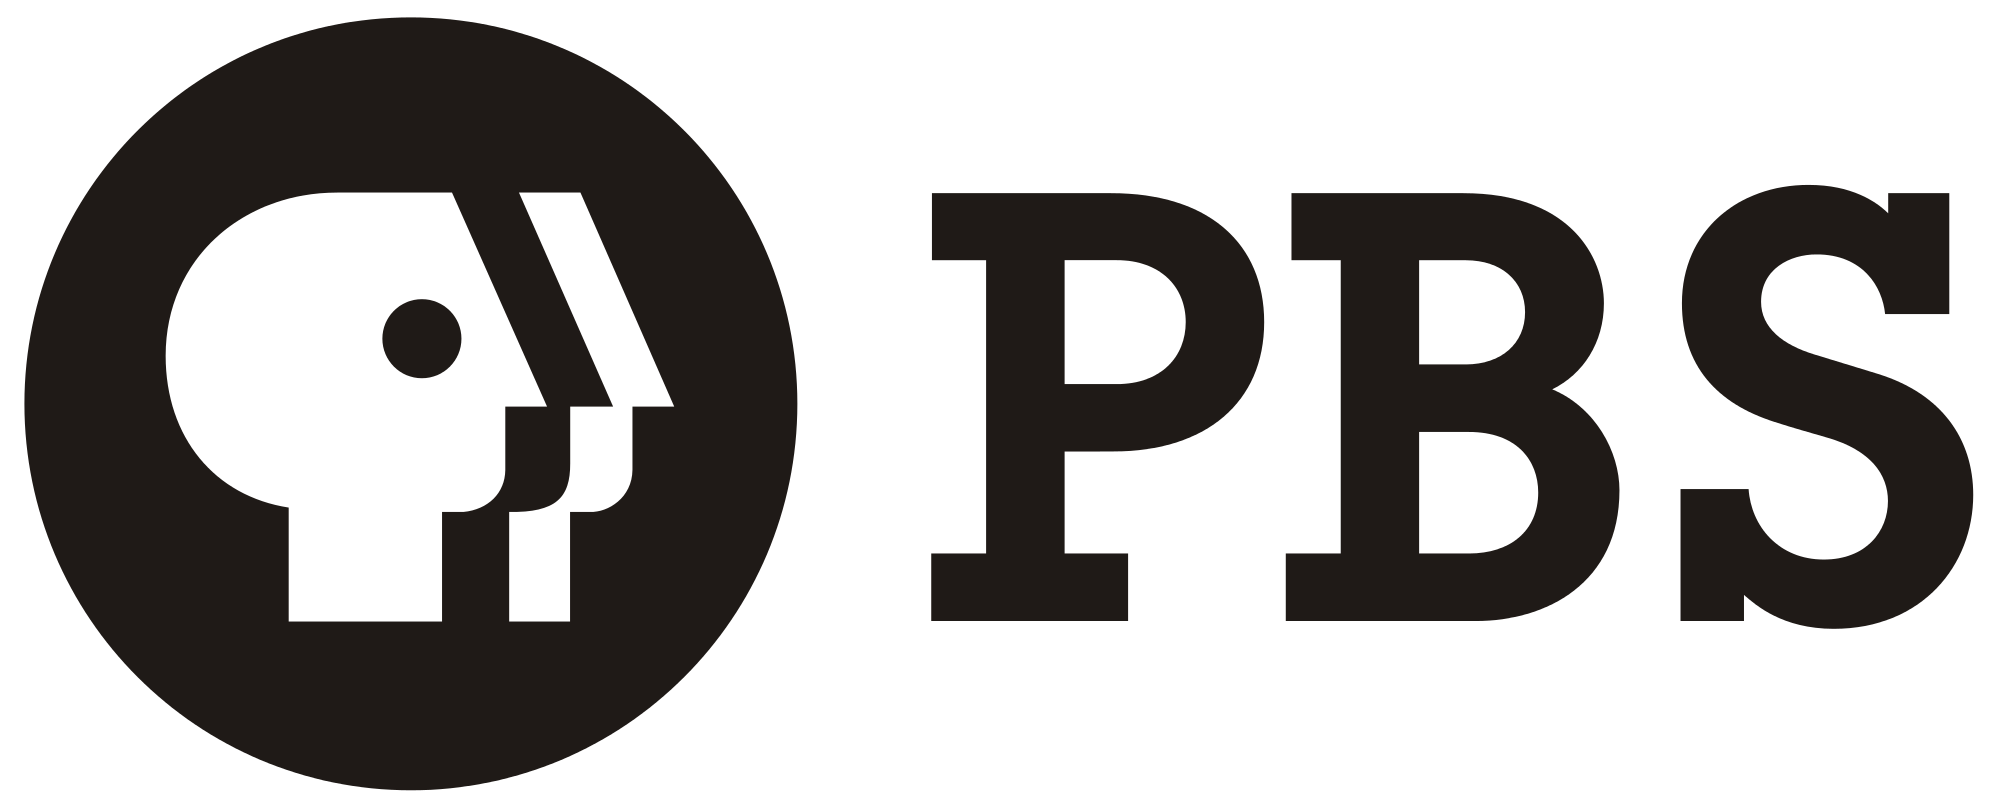 PBS_Logo.svg.png